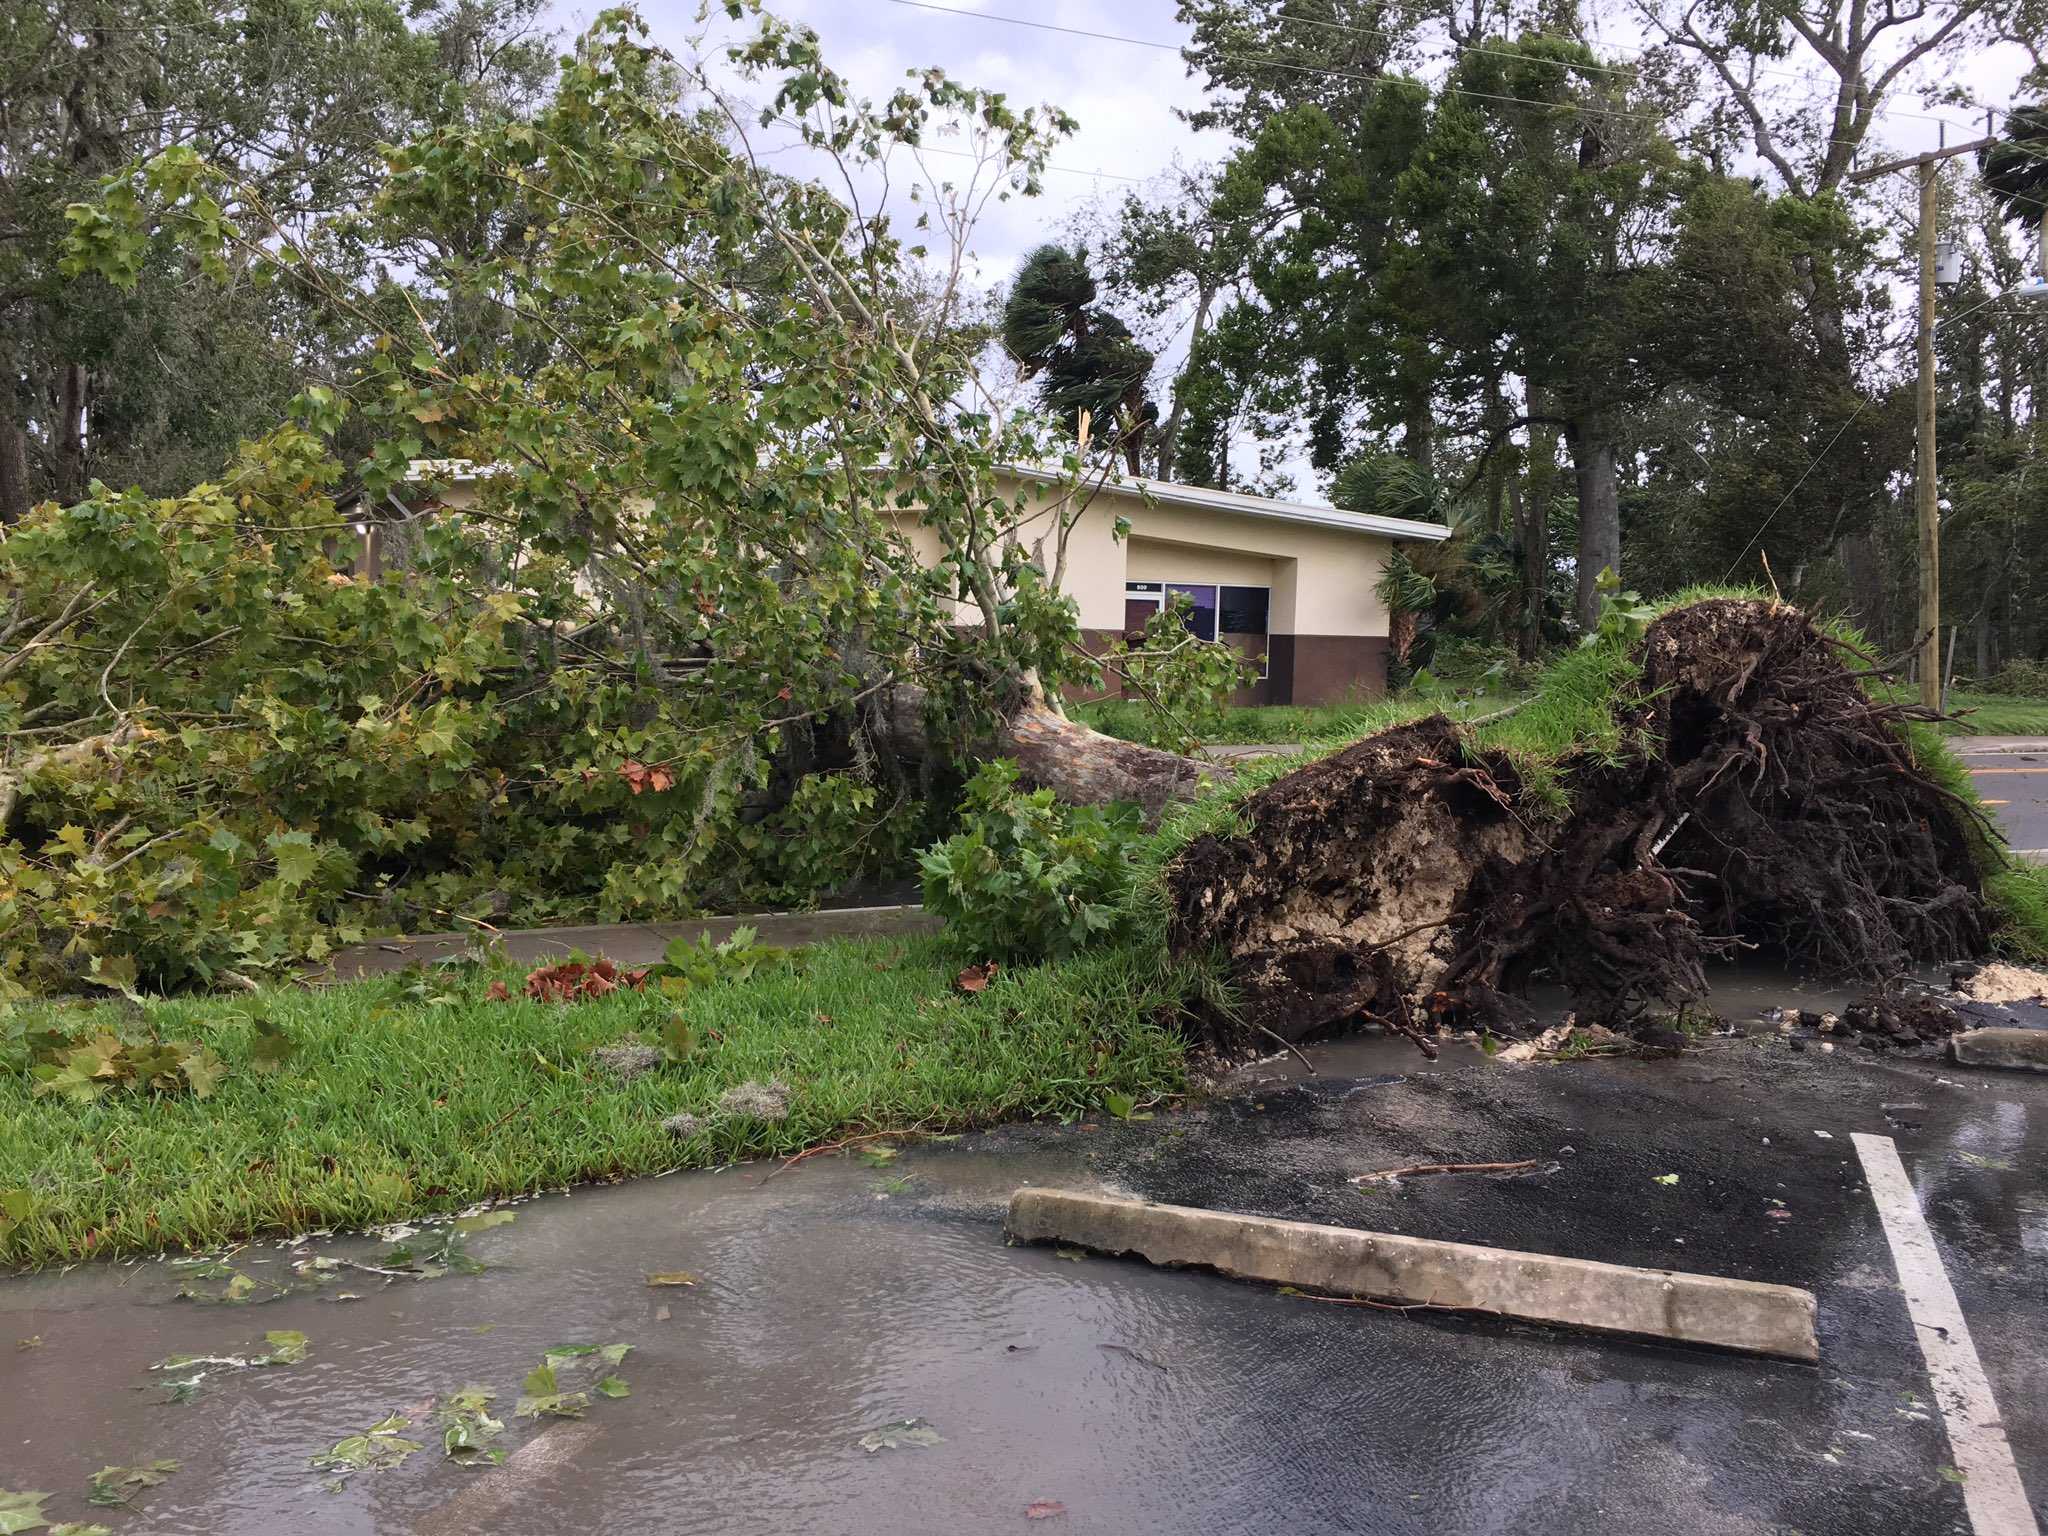 PHOTOS: Florida ravaged by Hurricane Irma